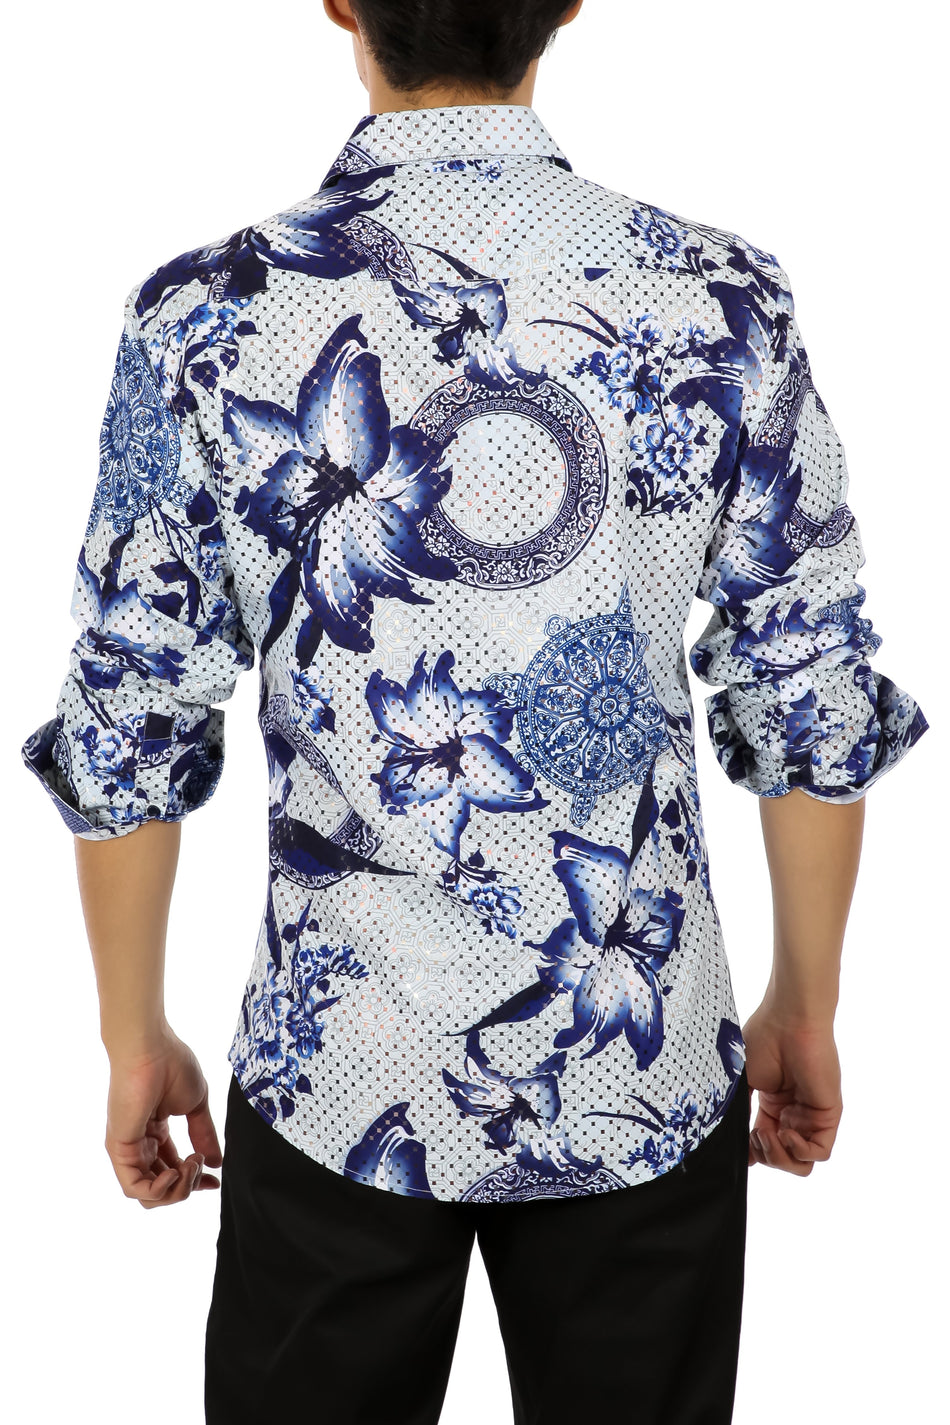 Floral Mandala Button Up Long Sleeve Dress Shirt